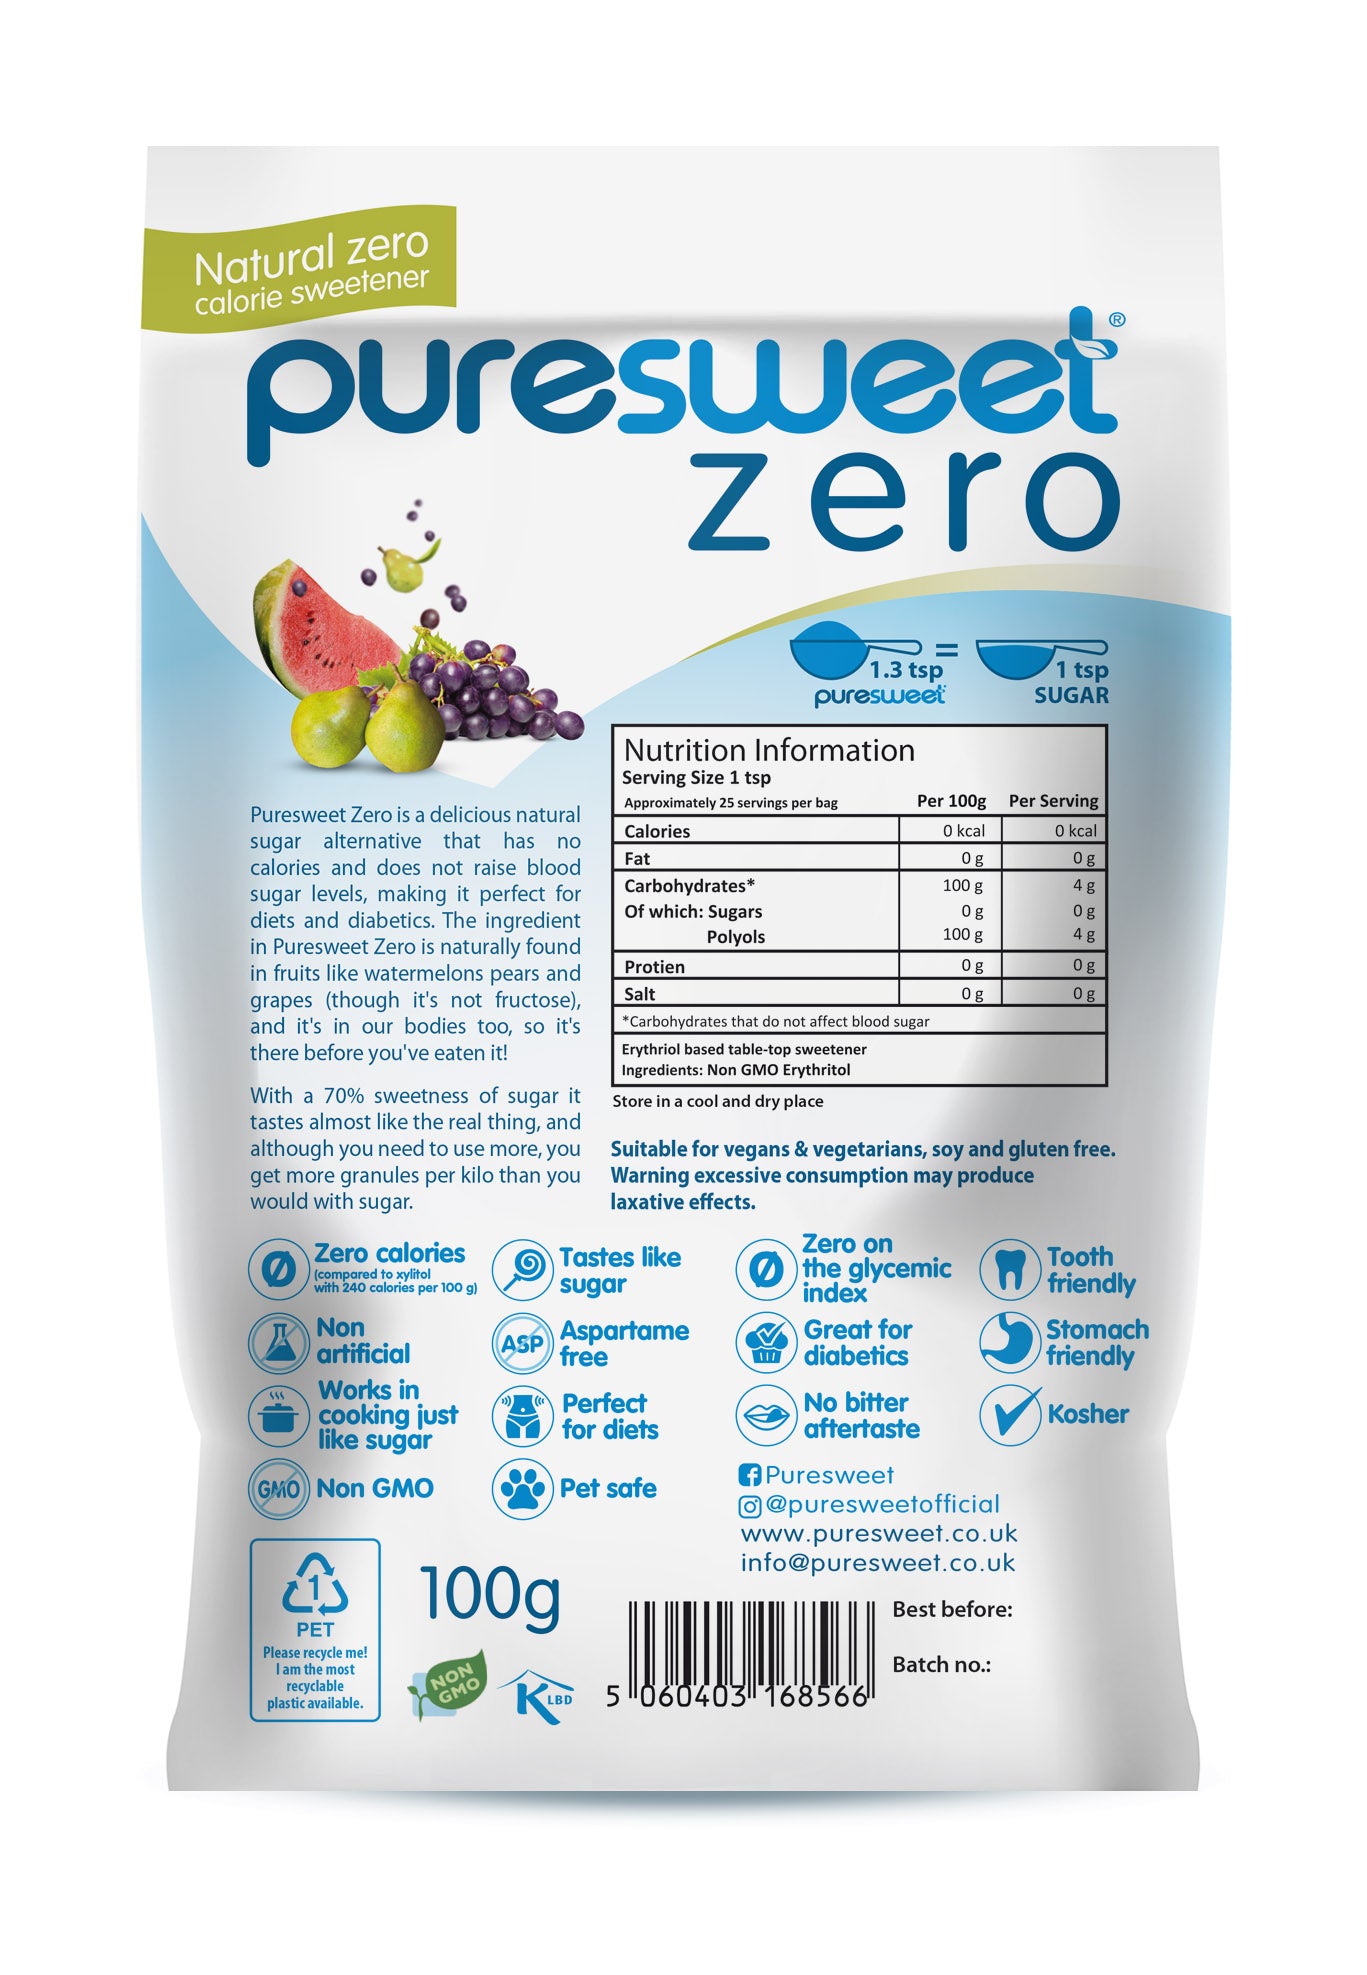 Puresweet Zero® 100% Natural Zero Calorie Sweetener 1kg, No bitter aftertaste, Diabetic Friendly, Tooth Friendly, Vegan, Non GMO.